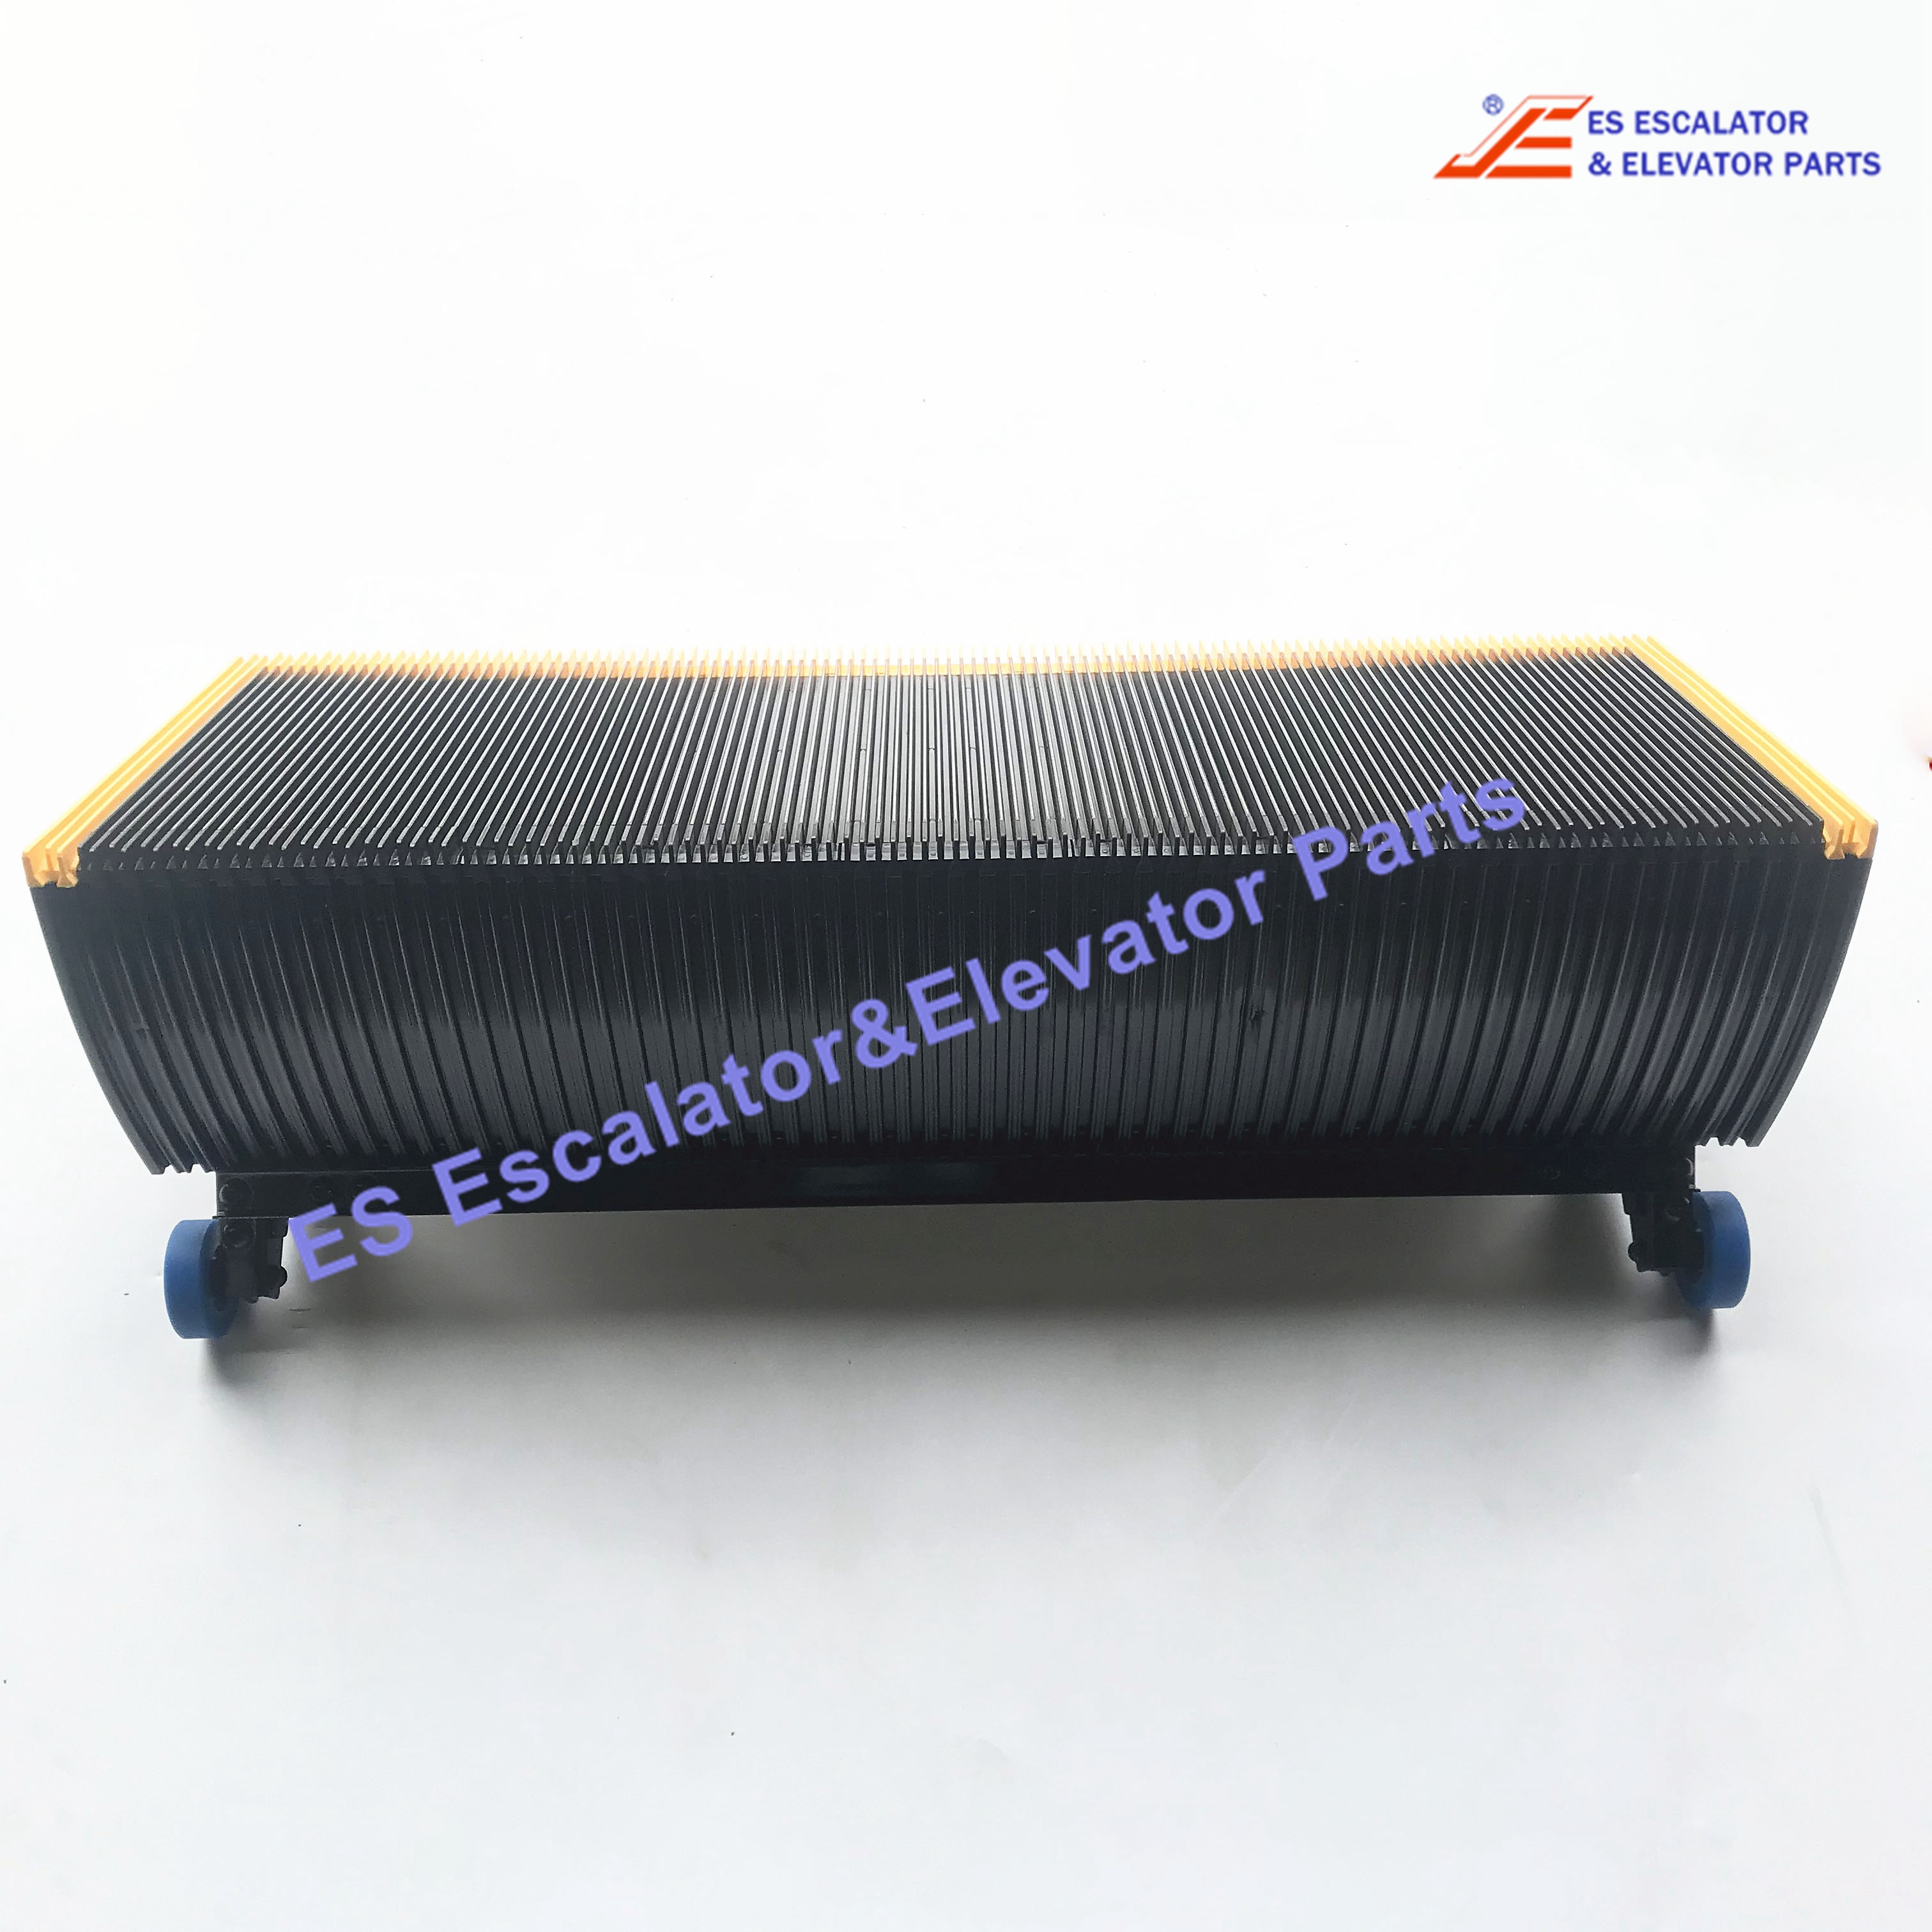 YS 123A035-1 Escalator Step Black Color 30 Degree Dimension 1000mm X 410mm Use For Mitsubishi